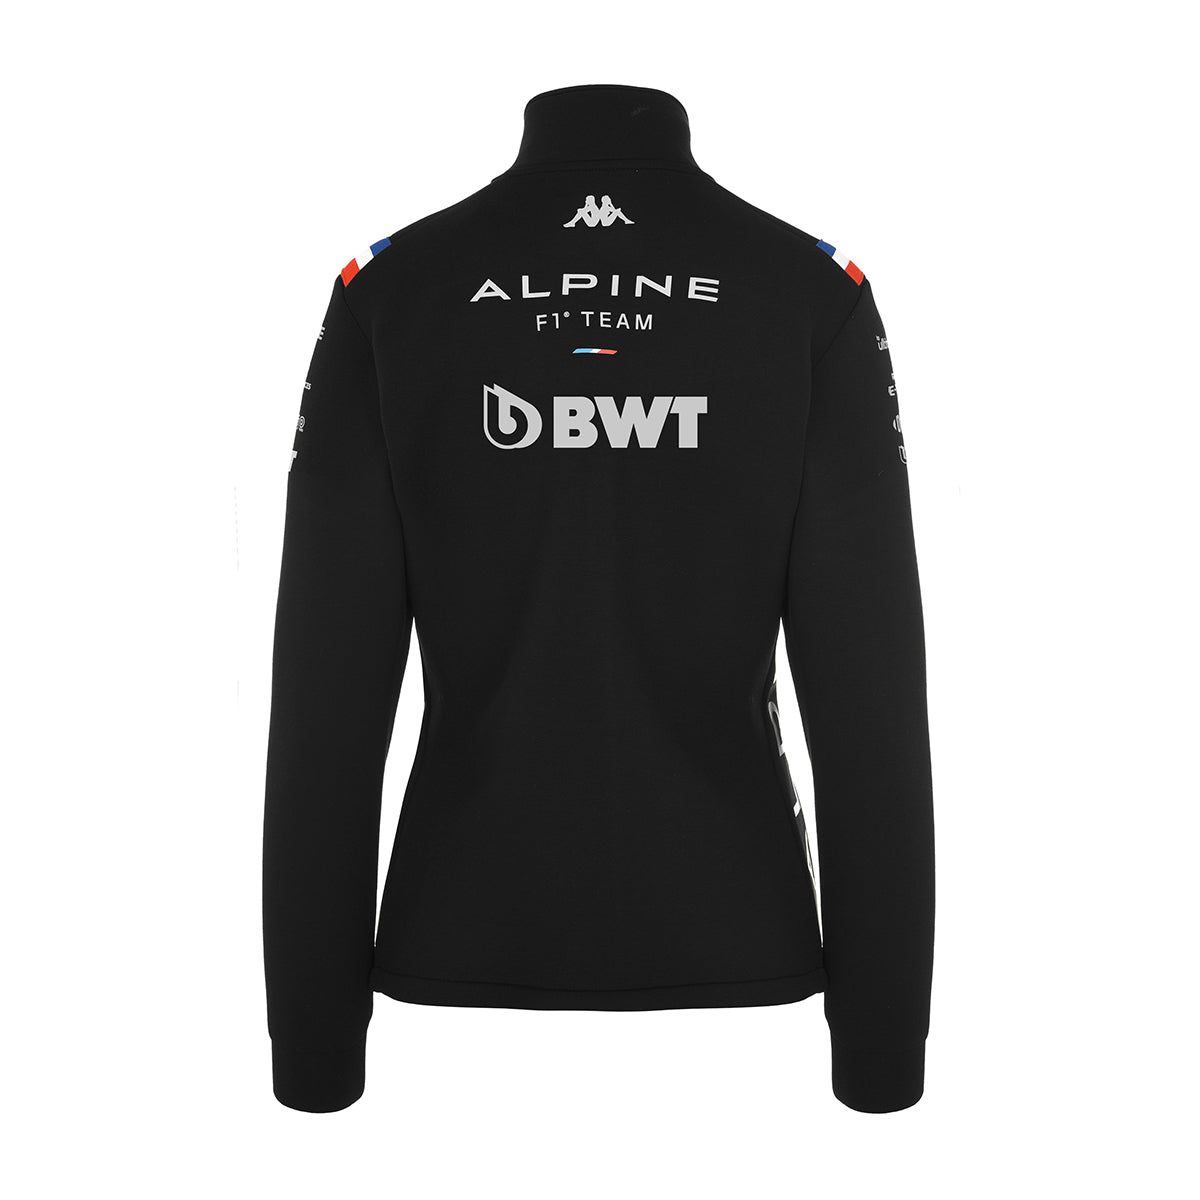 Chaqueta Atrew BWT Alpine F1 Team Negra Mujer - imagen 3